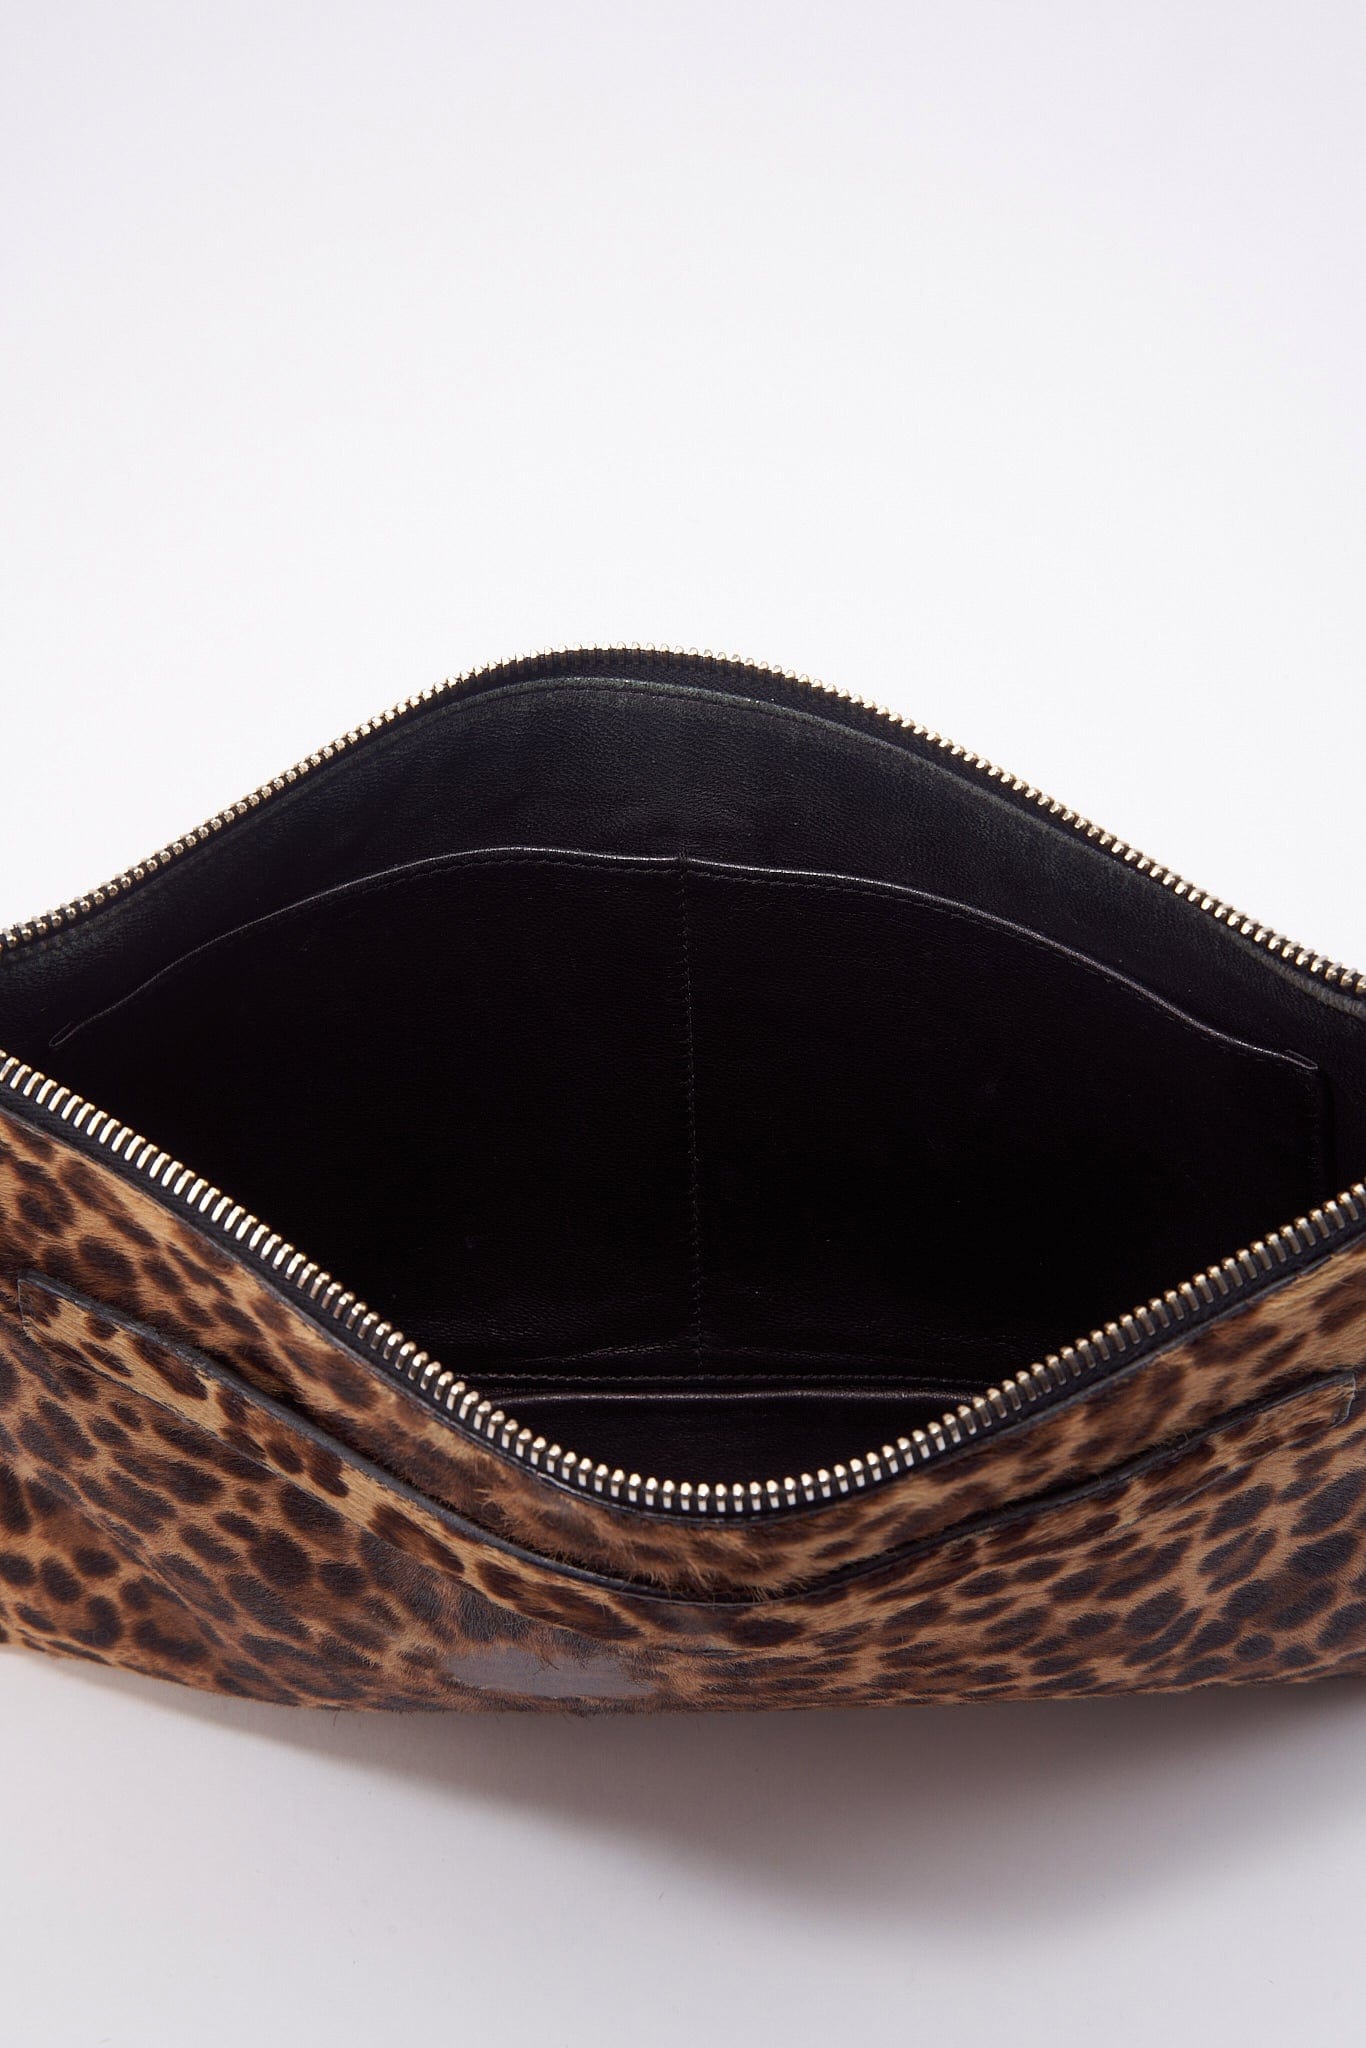 Prada Leopard Calf Hair Clutch Bag